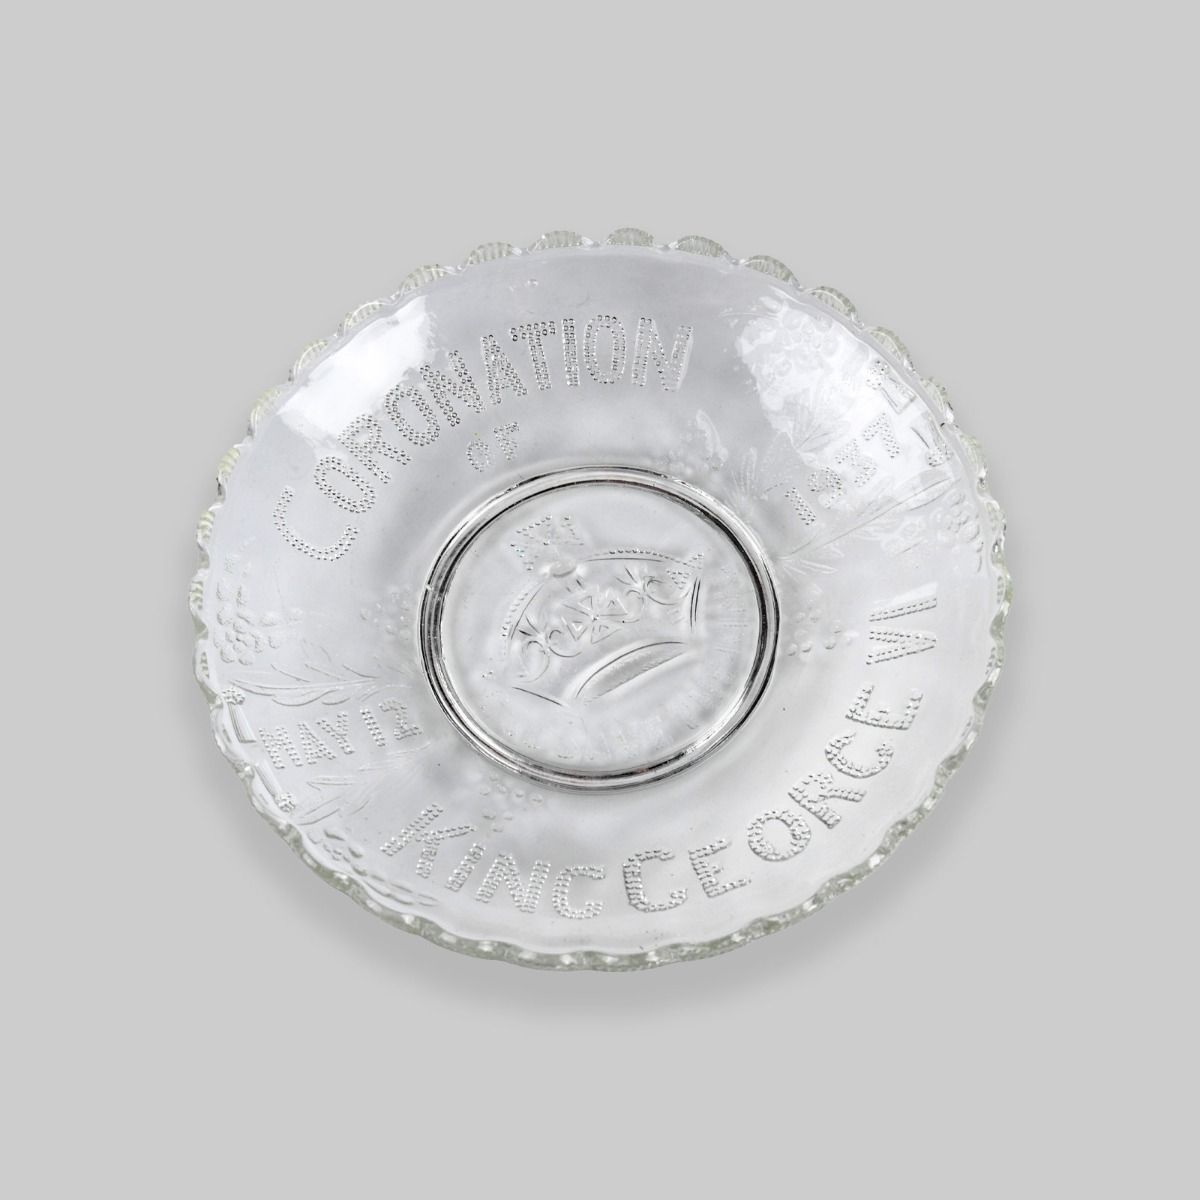 Vintage King George VI 1937 Coronation Glass Bowl